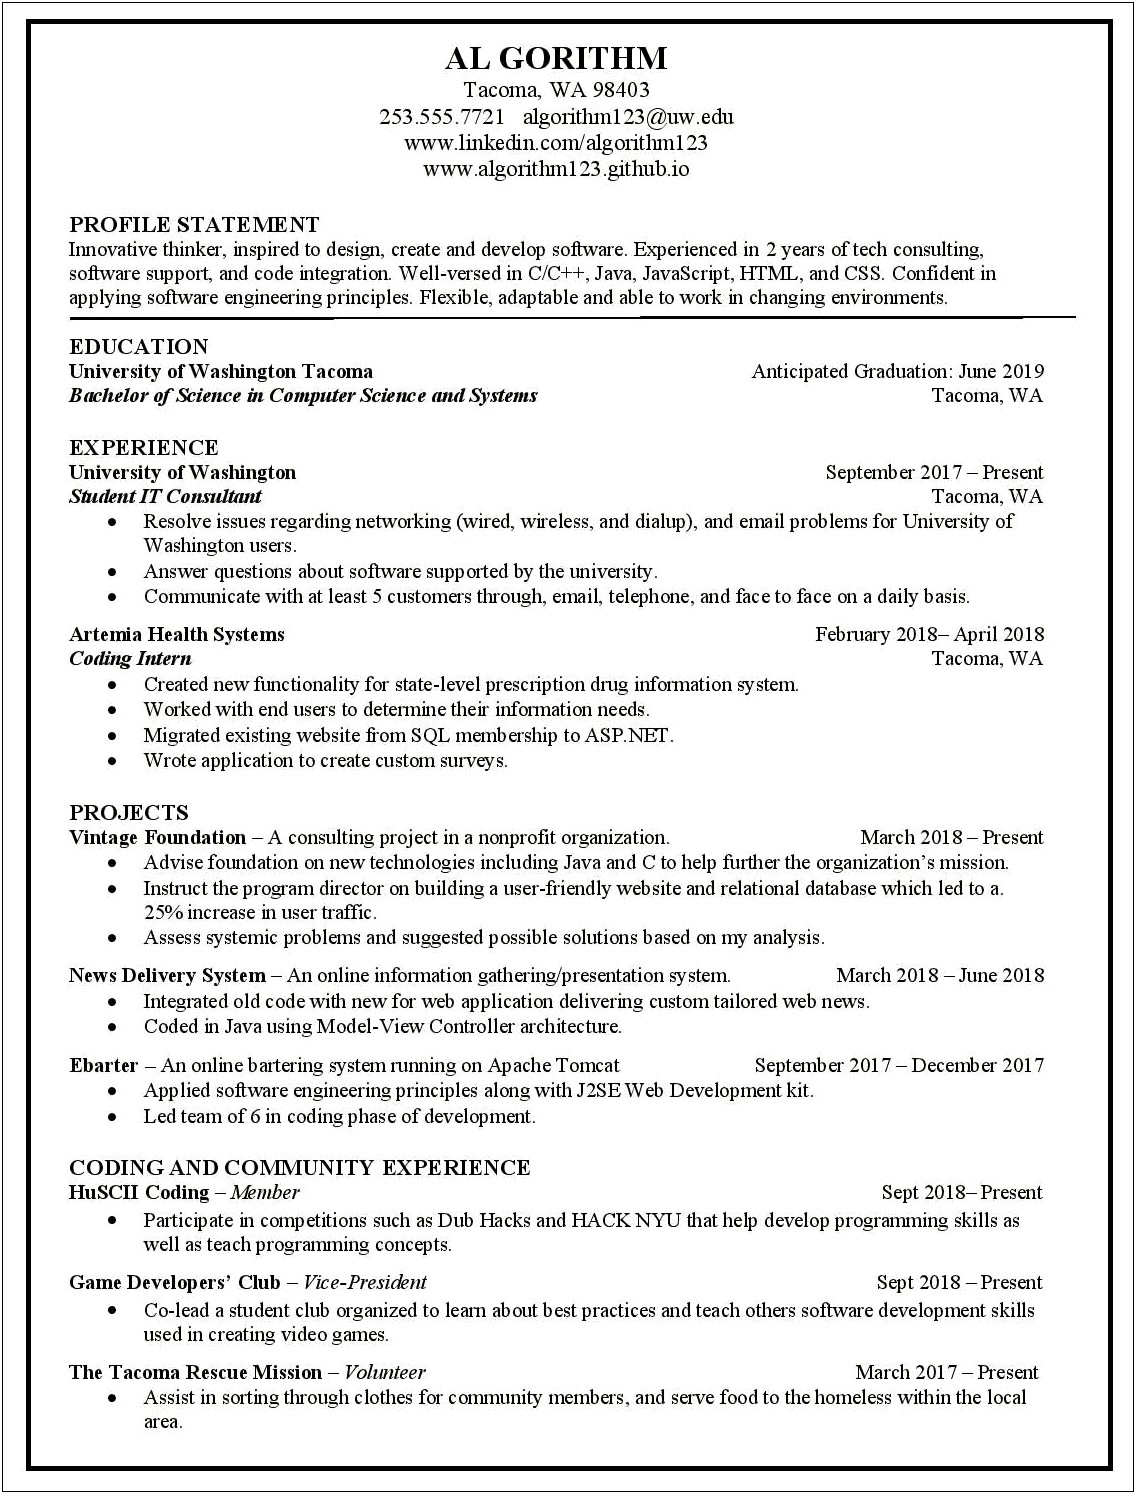 Resume For Job At University